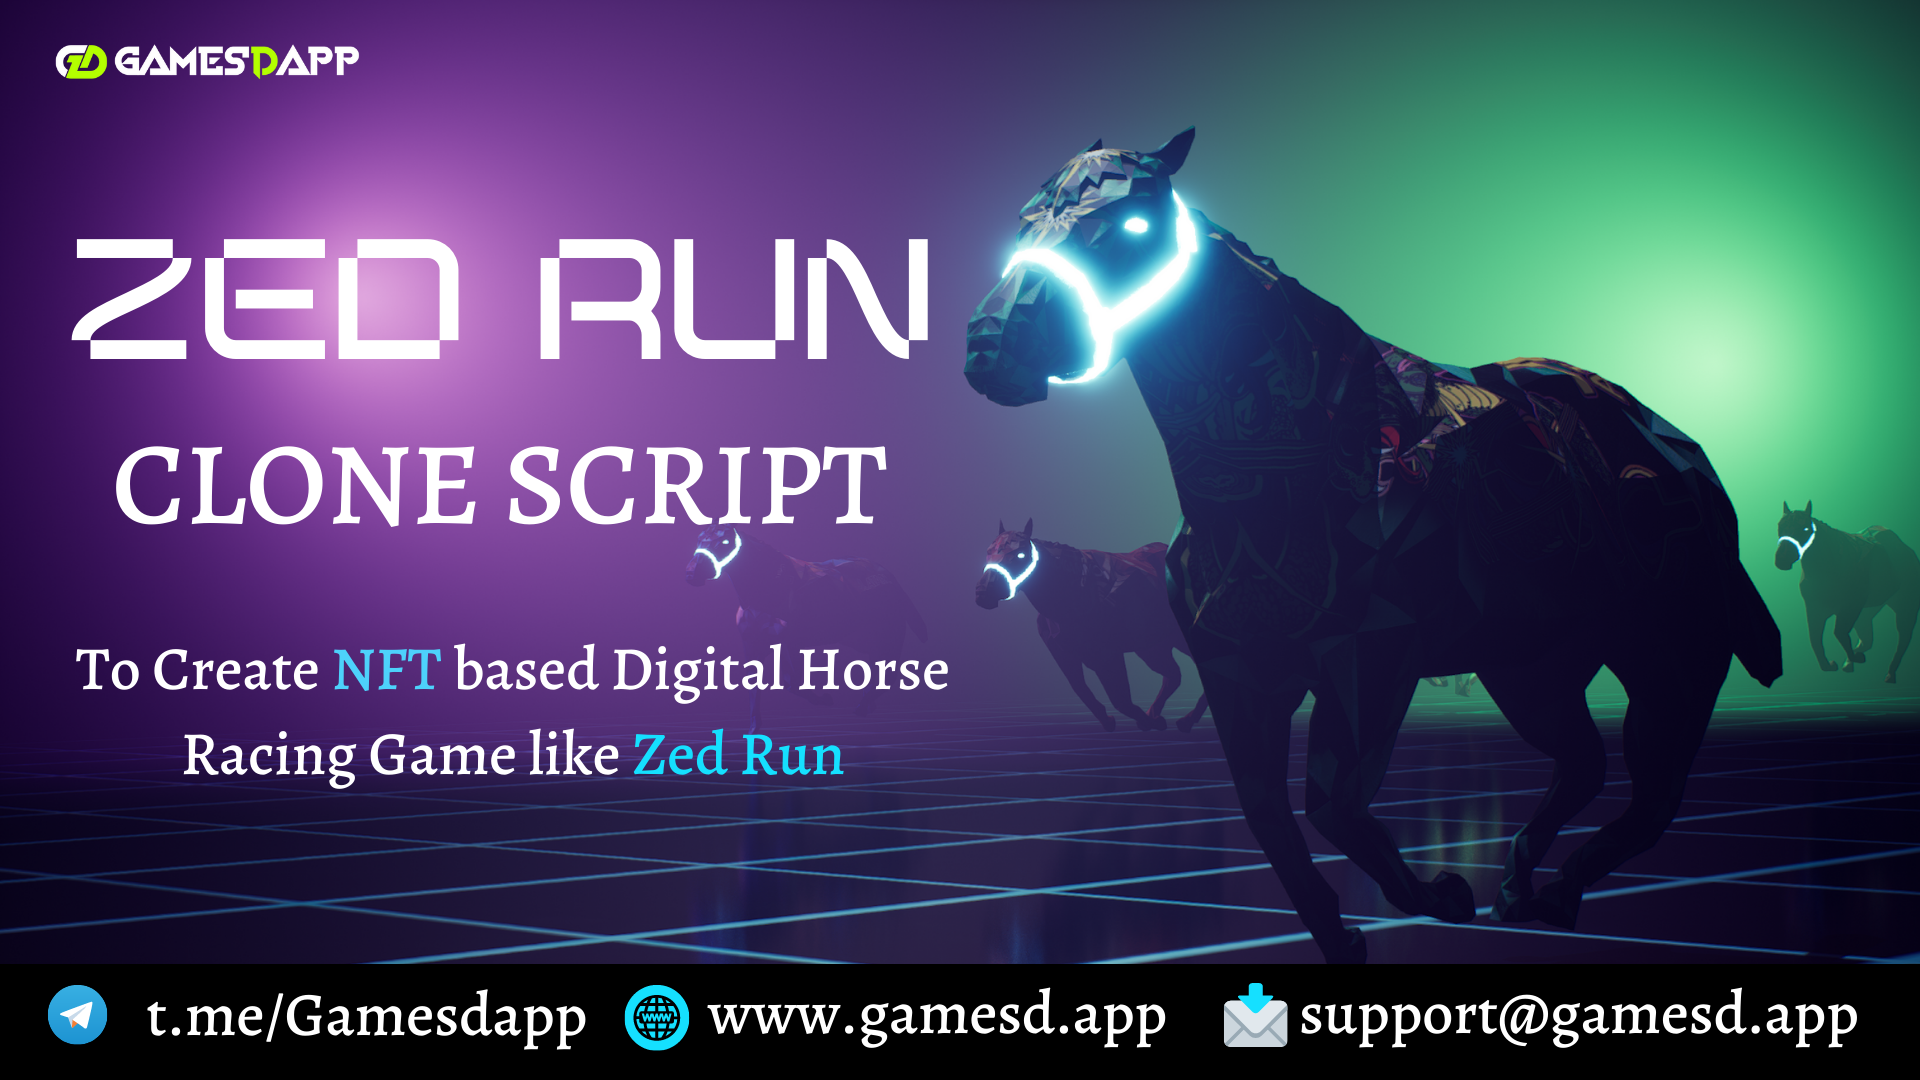 Zed Run Clone Script  - To Launch NFT based Digital Horse Racing Game like Zed Run